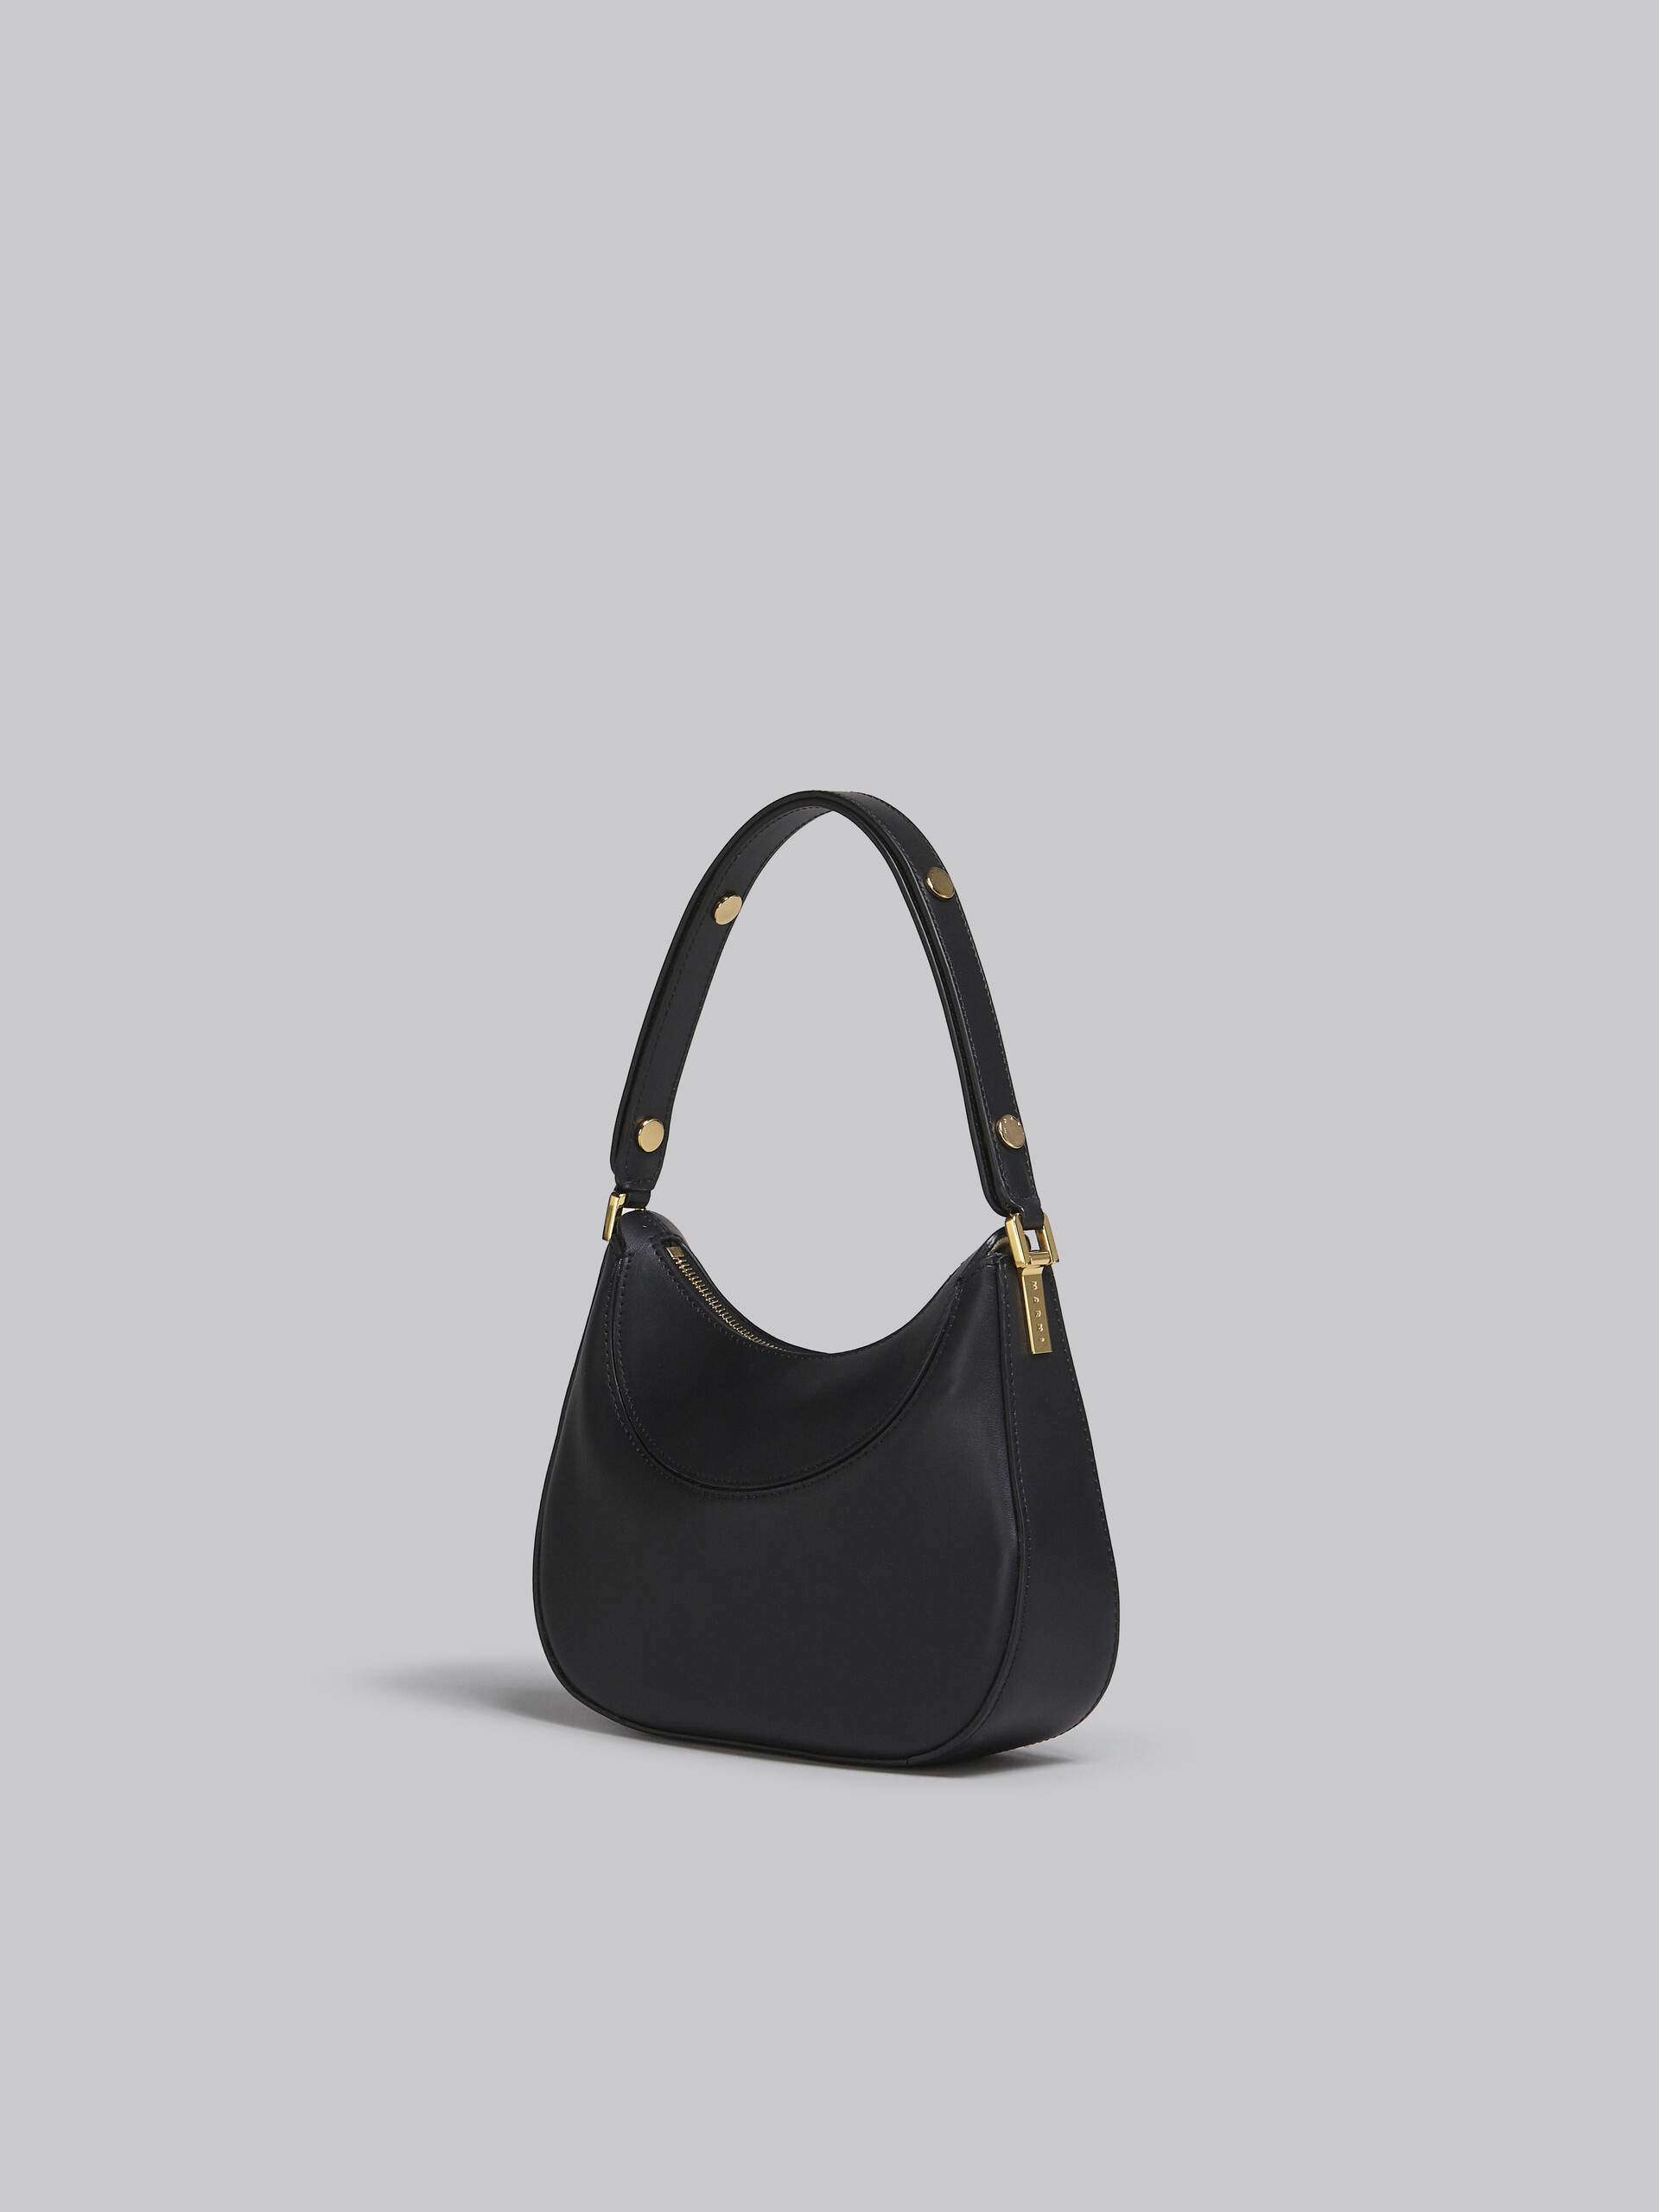 Milano mini bag in black leather - Handbags - Image 3